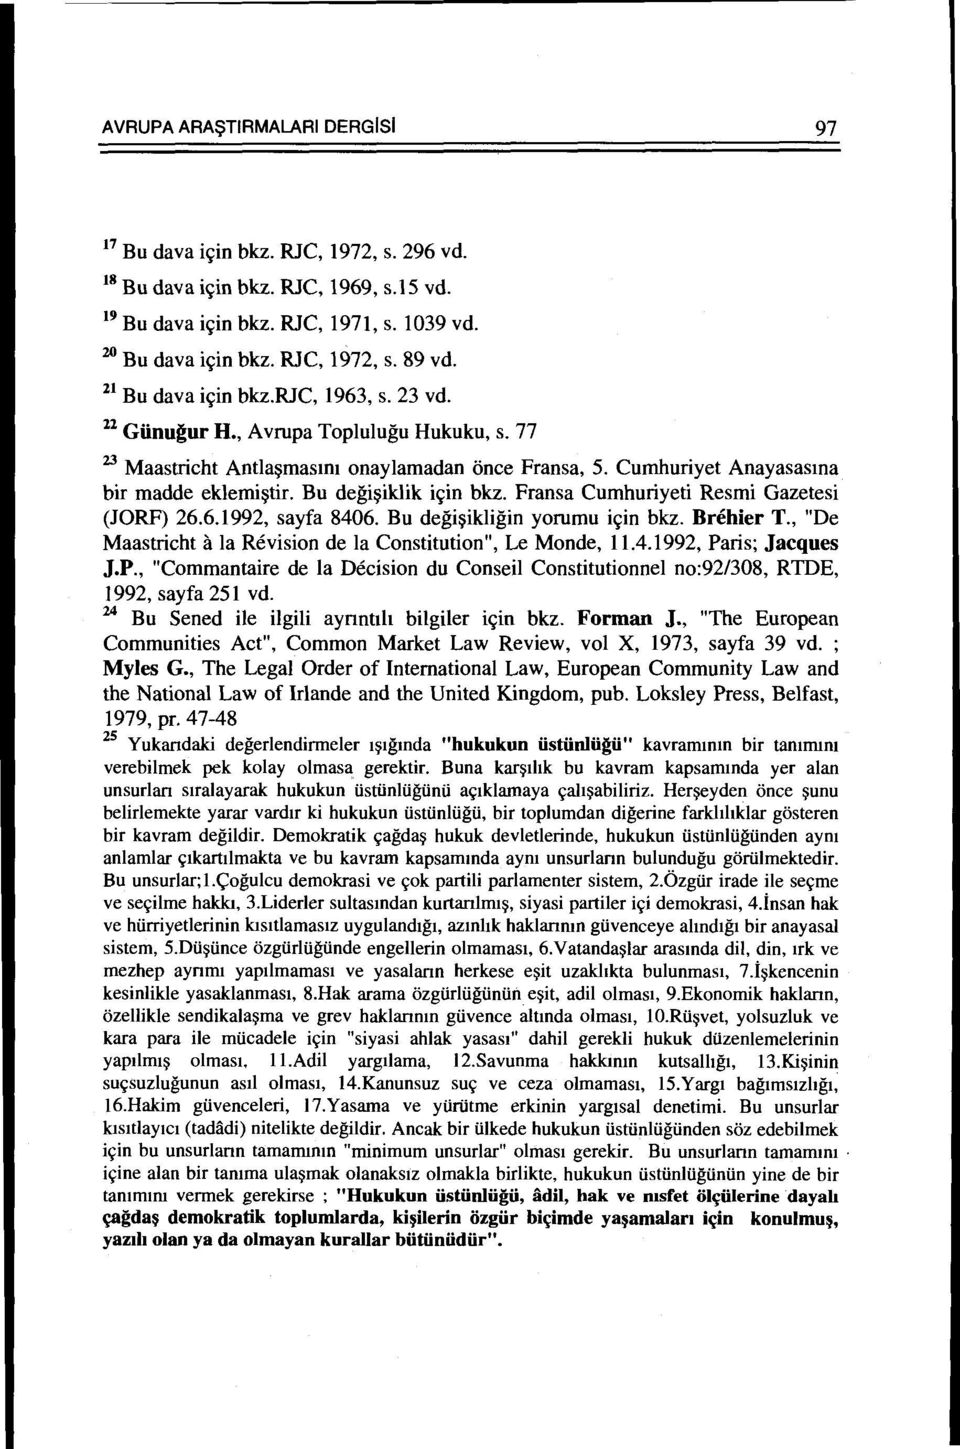 Bu degi~iklik i~in bkz. Fransa Cumhuriyeti Resmi Gazetesi (JORF) 26.6.1992, sayfa 8406. Bu degi~ikligin yorumu i~in bkz. Brehier T., "De Maastricht a Ia Revision de Ia Constitution", Le Monde, 11.4.1992, Paris; Jacques J.